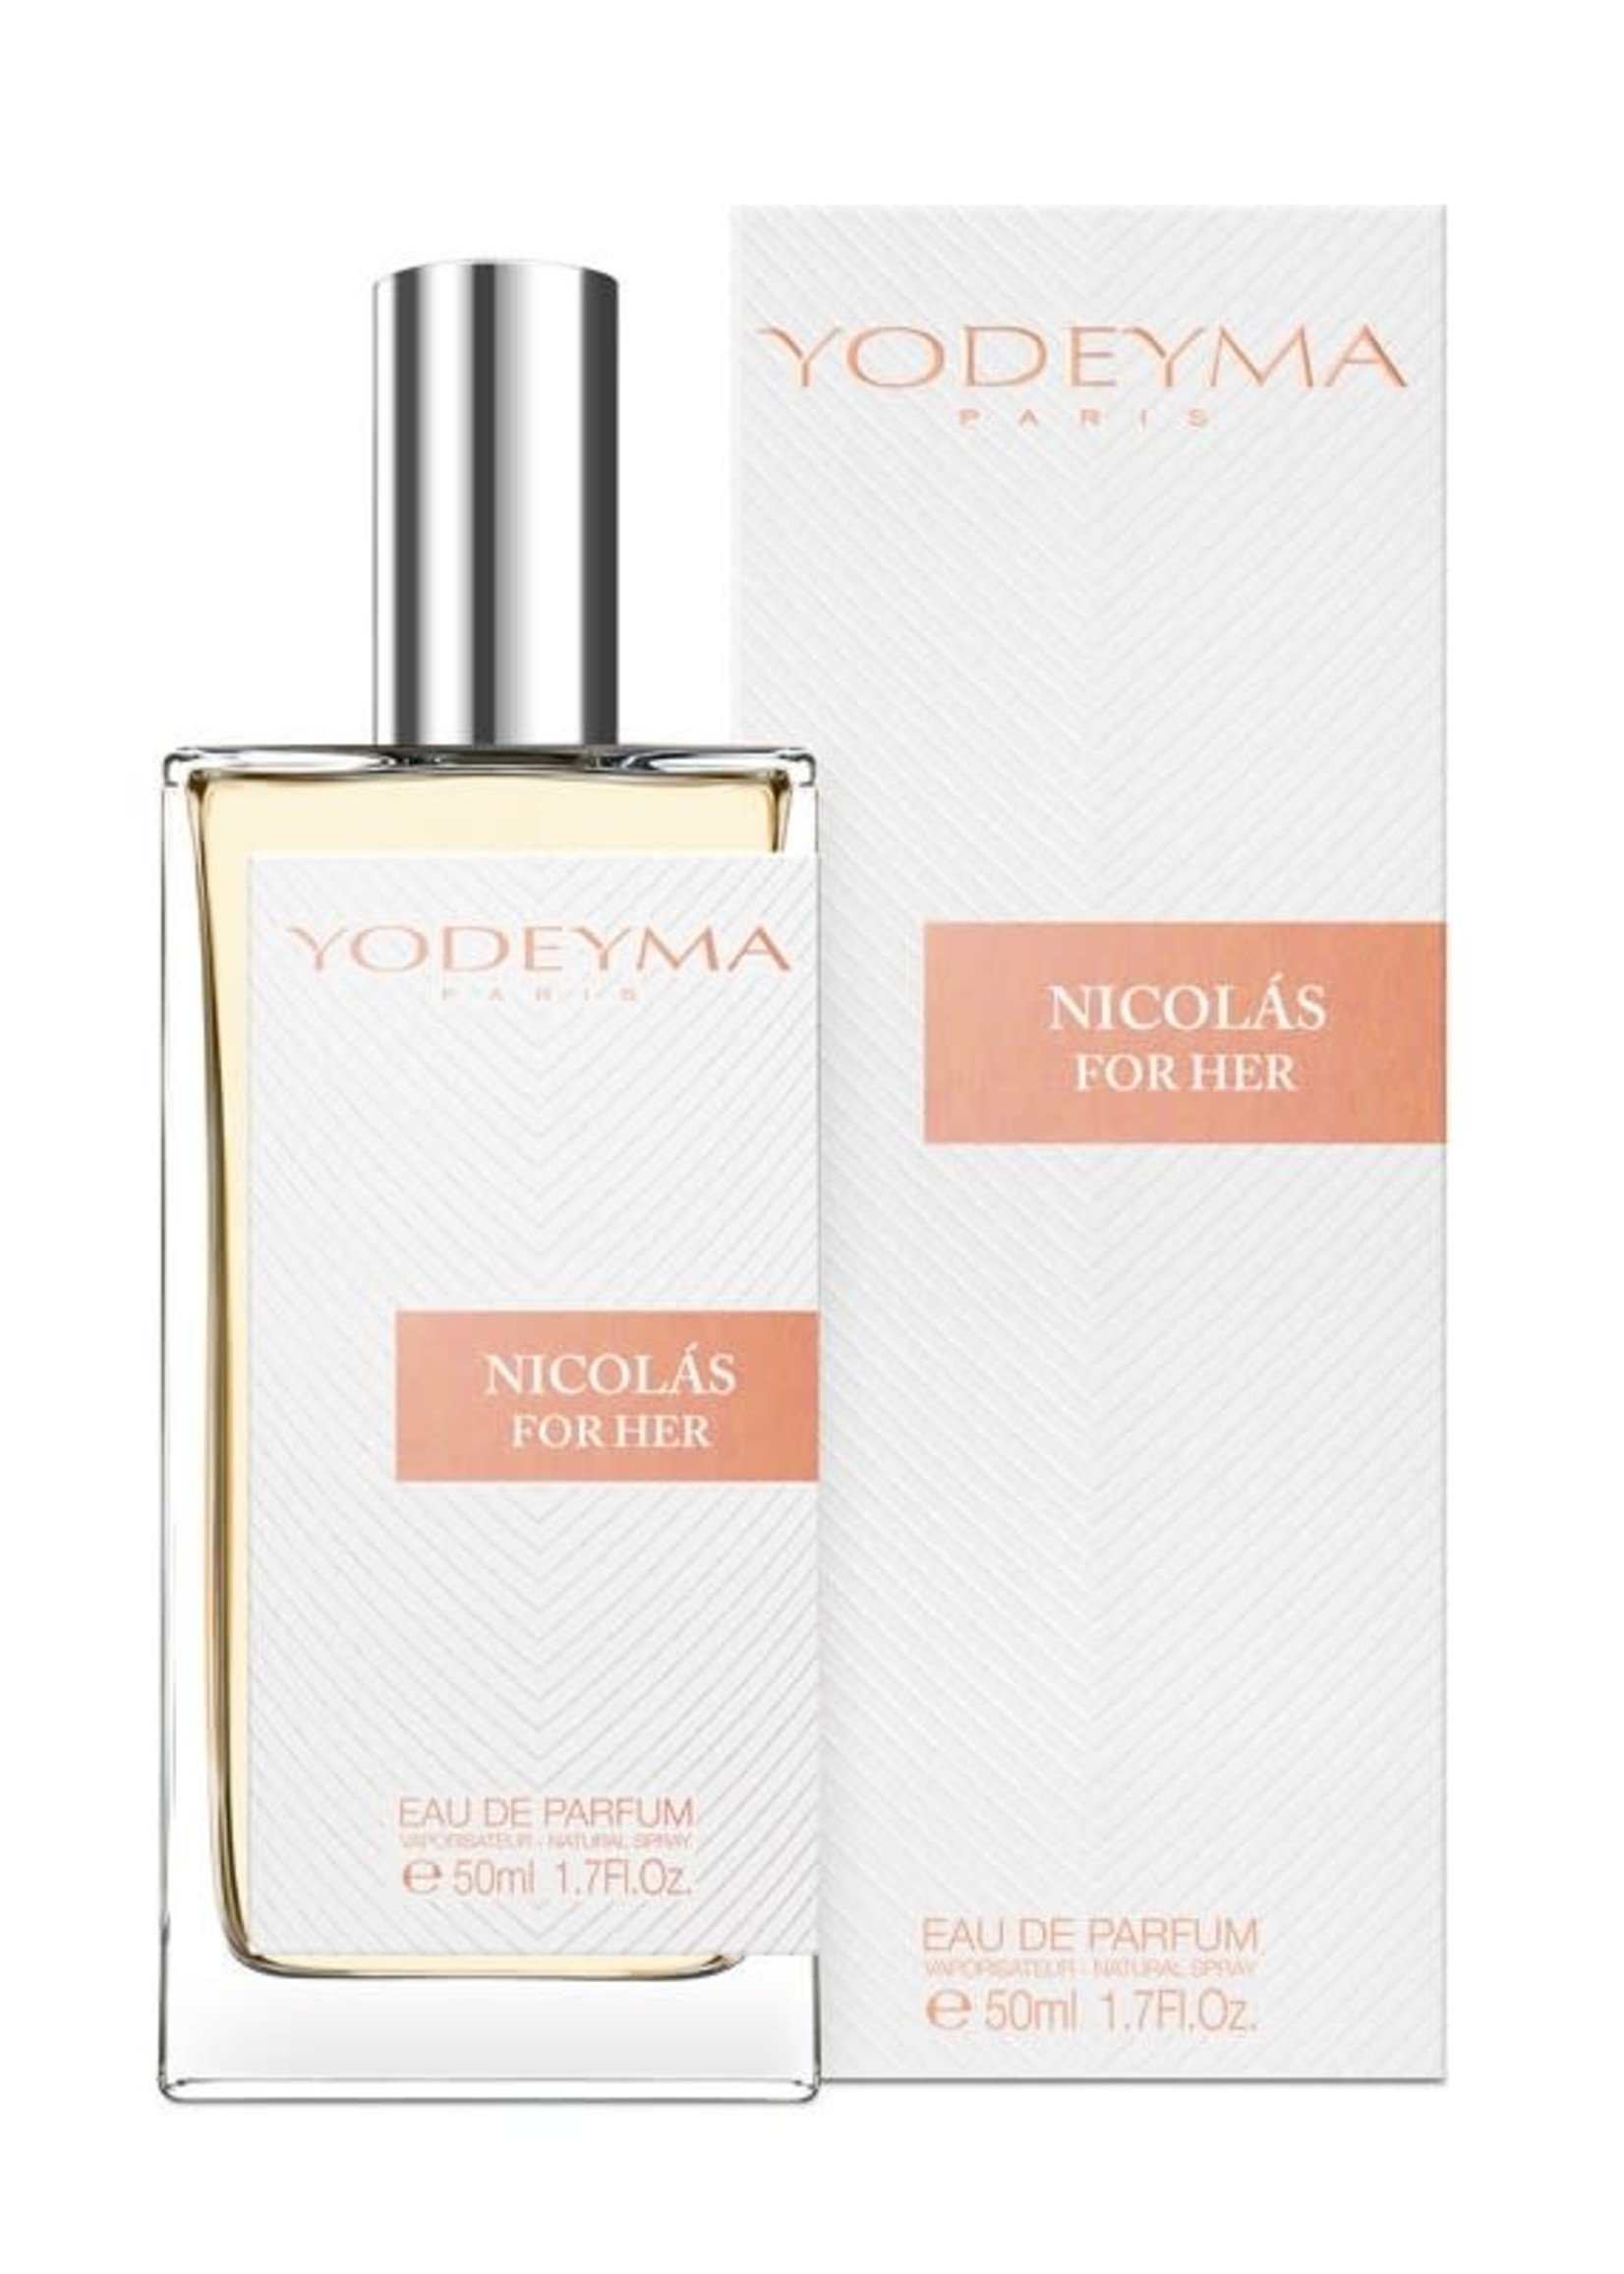 Yodeyma Paris Parfum Yodeyma Paris Parfum Nicolas For Her - 50 ml